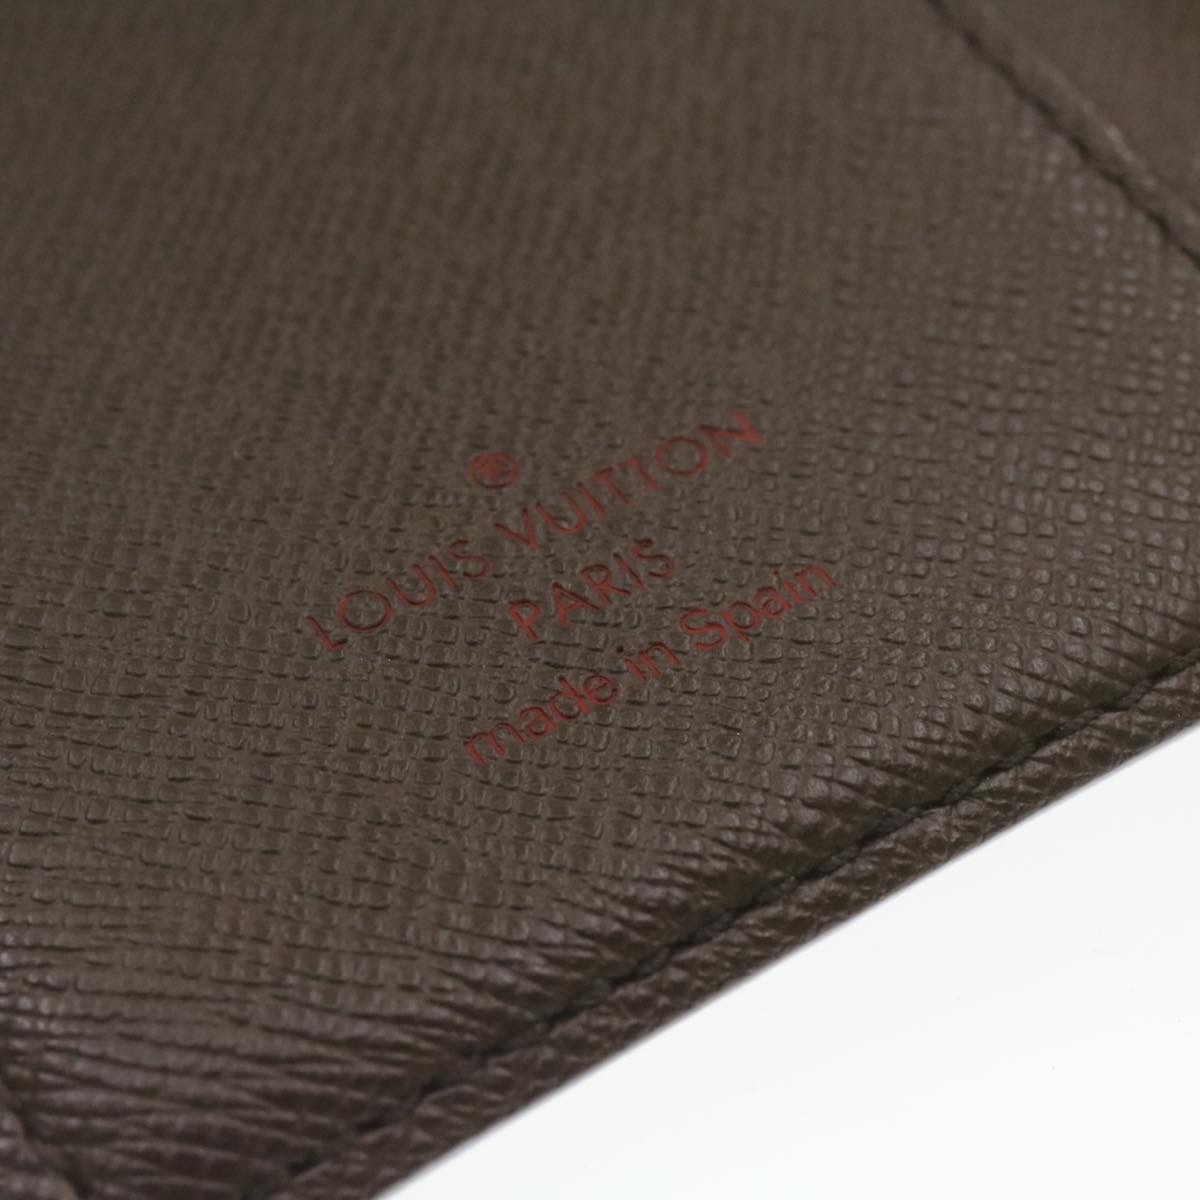 Shop Louis Vuitton MONOGRAM Large Ring Agenda Cover (R20106) by